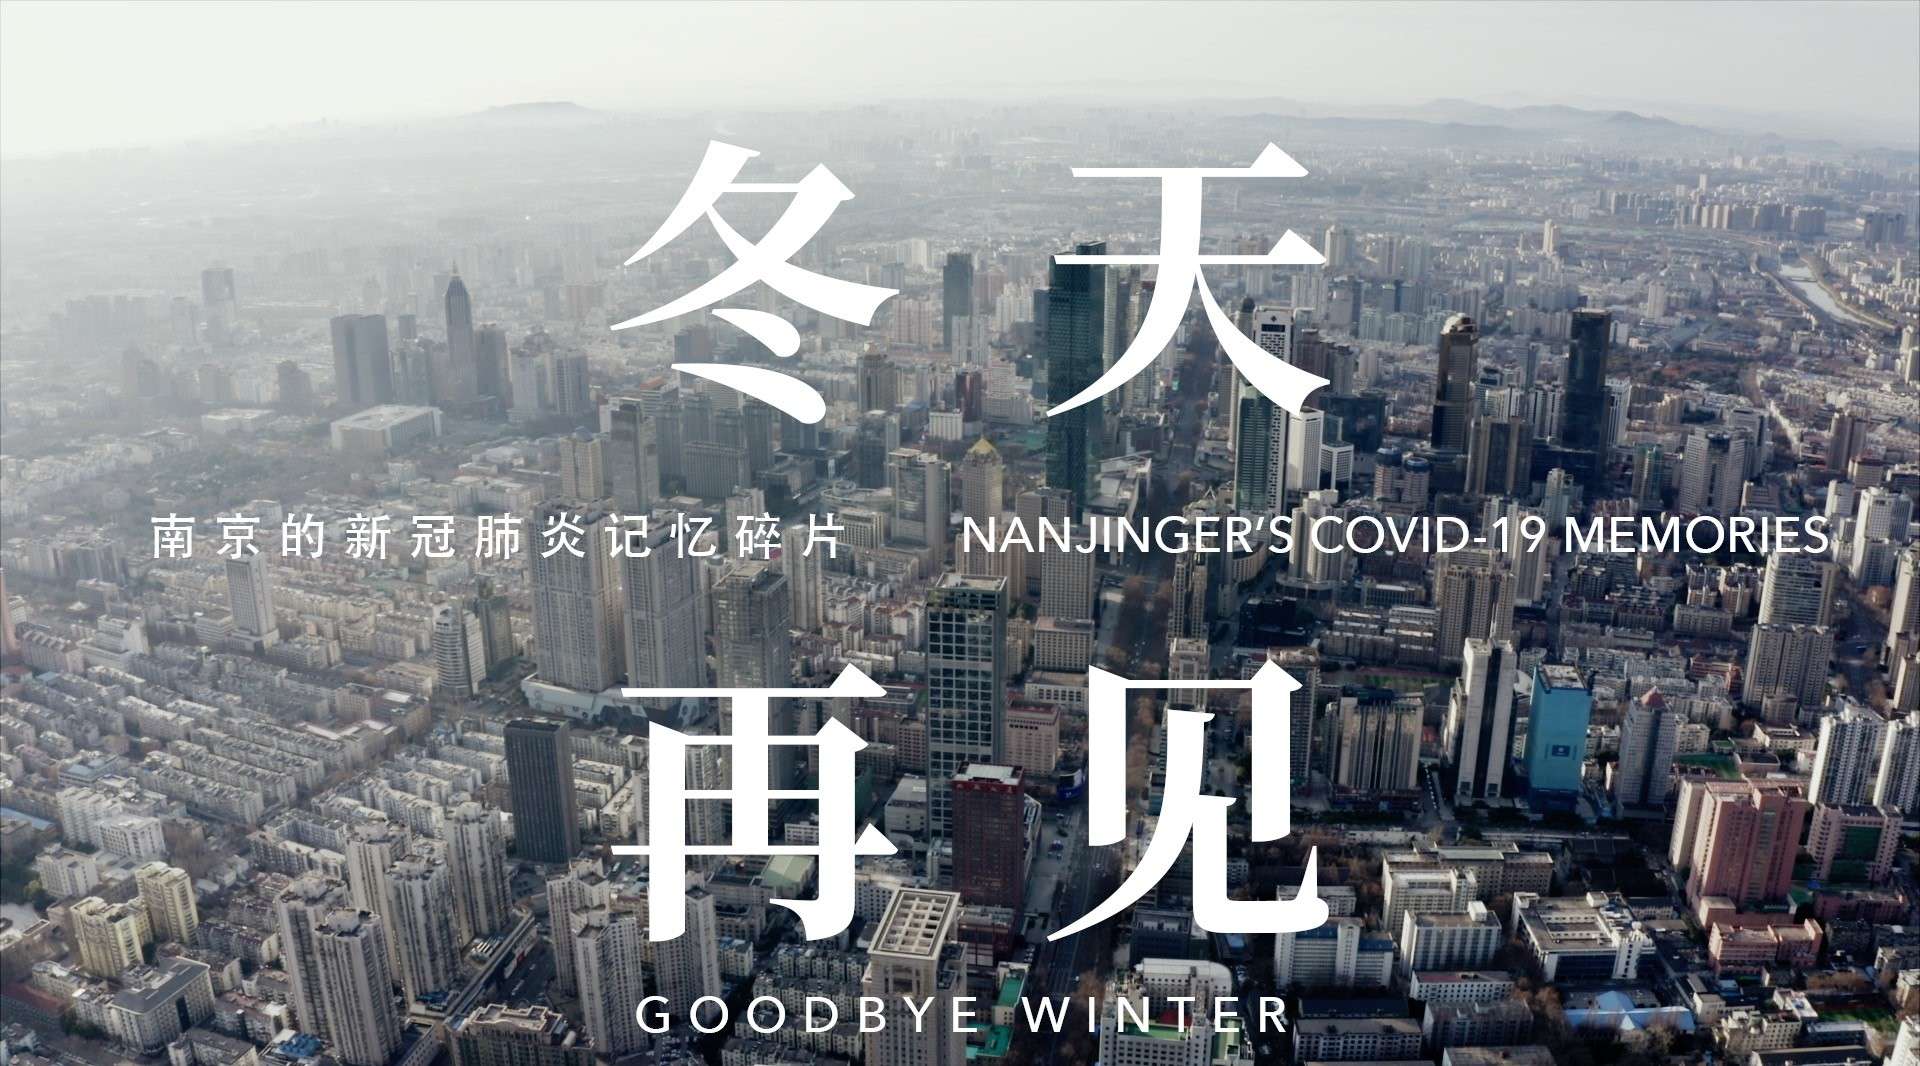 《冬天再见》：GOODBYE WINTER - Nanjingers' COVID-19 Memories